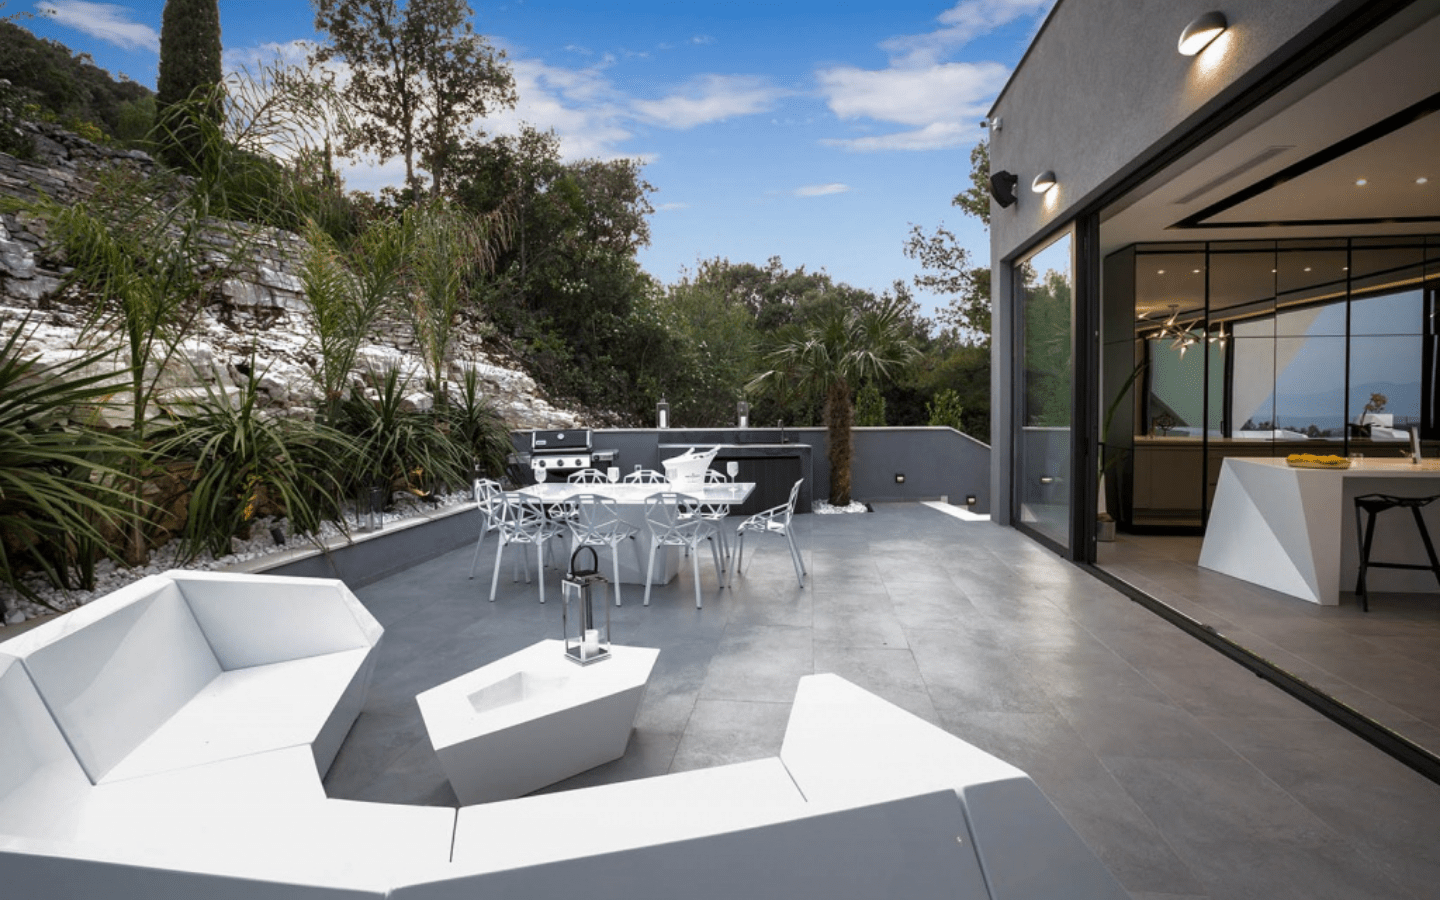 Villa contemporaine avec potentiel locatif sur l'île de Korčula en Croatie